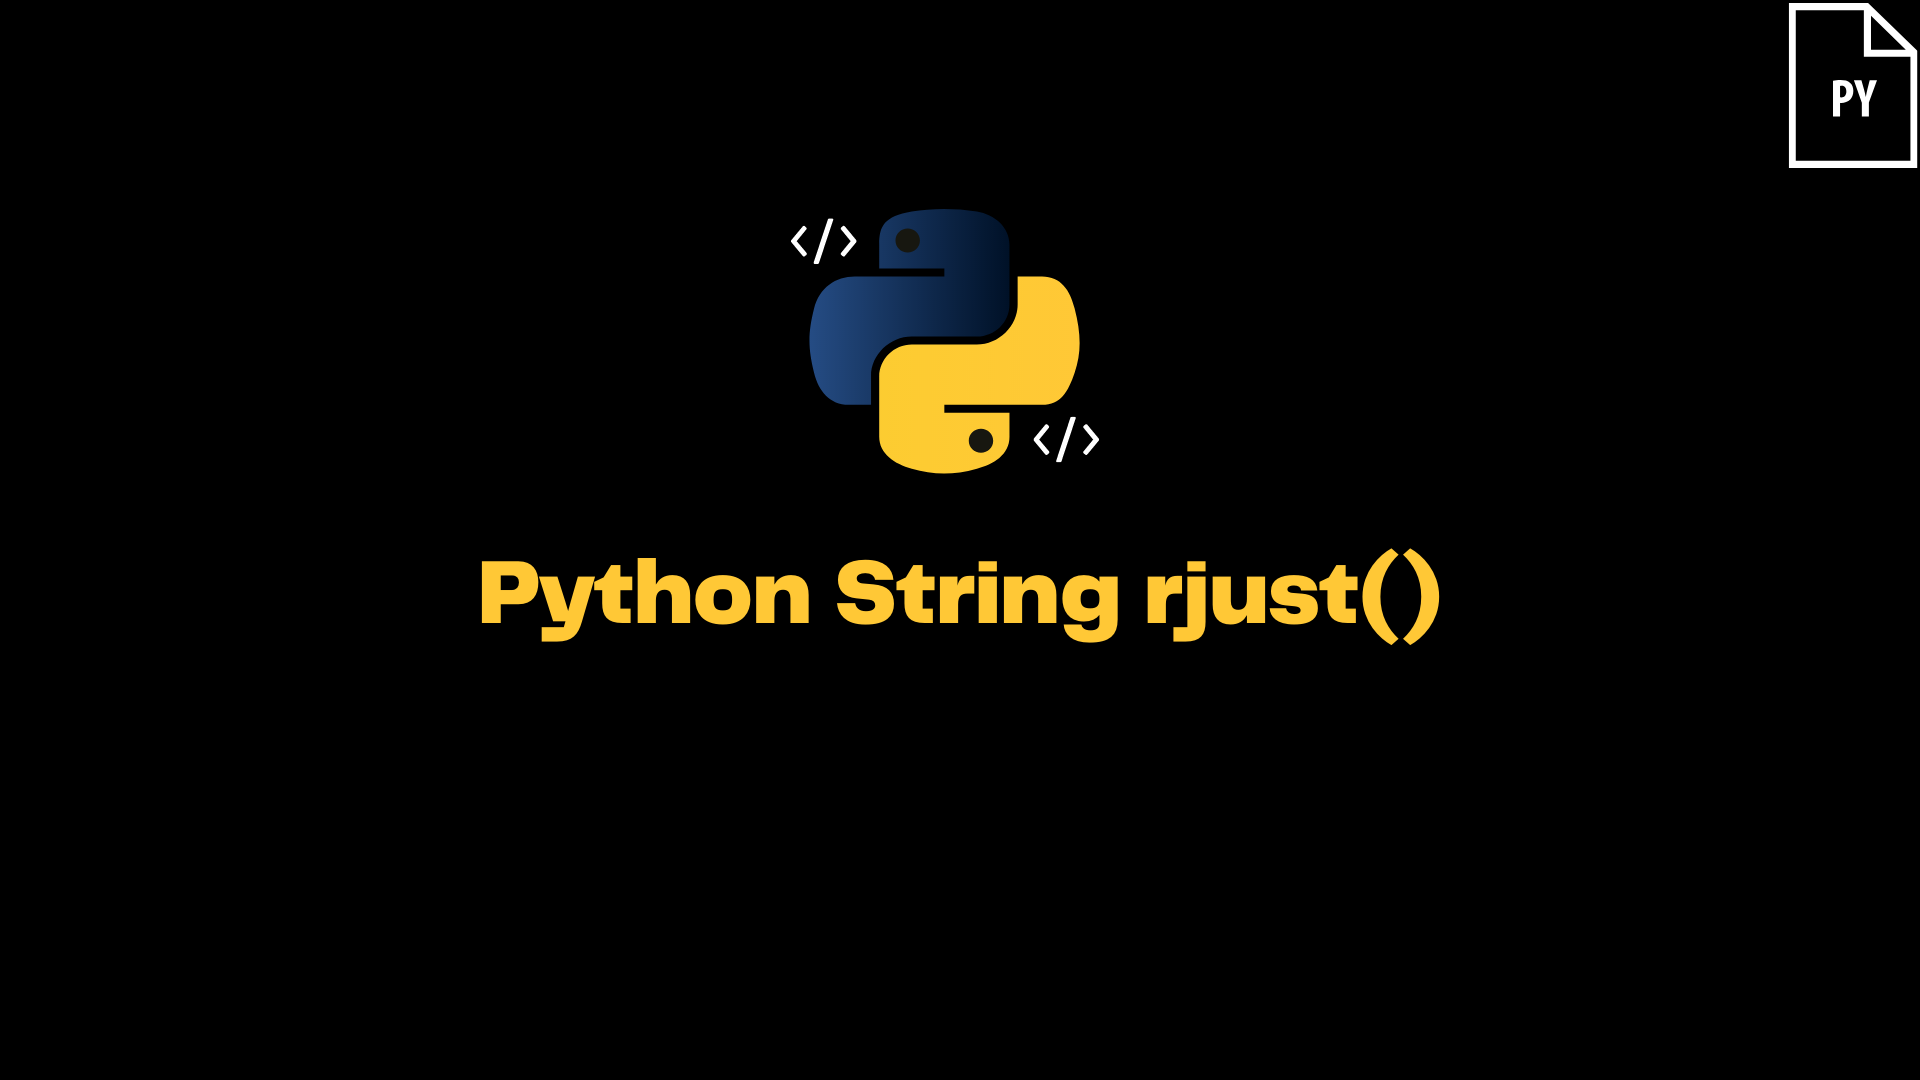 ItsMyCode: Python String rjust()